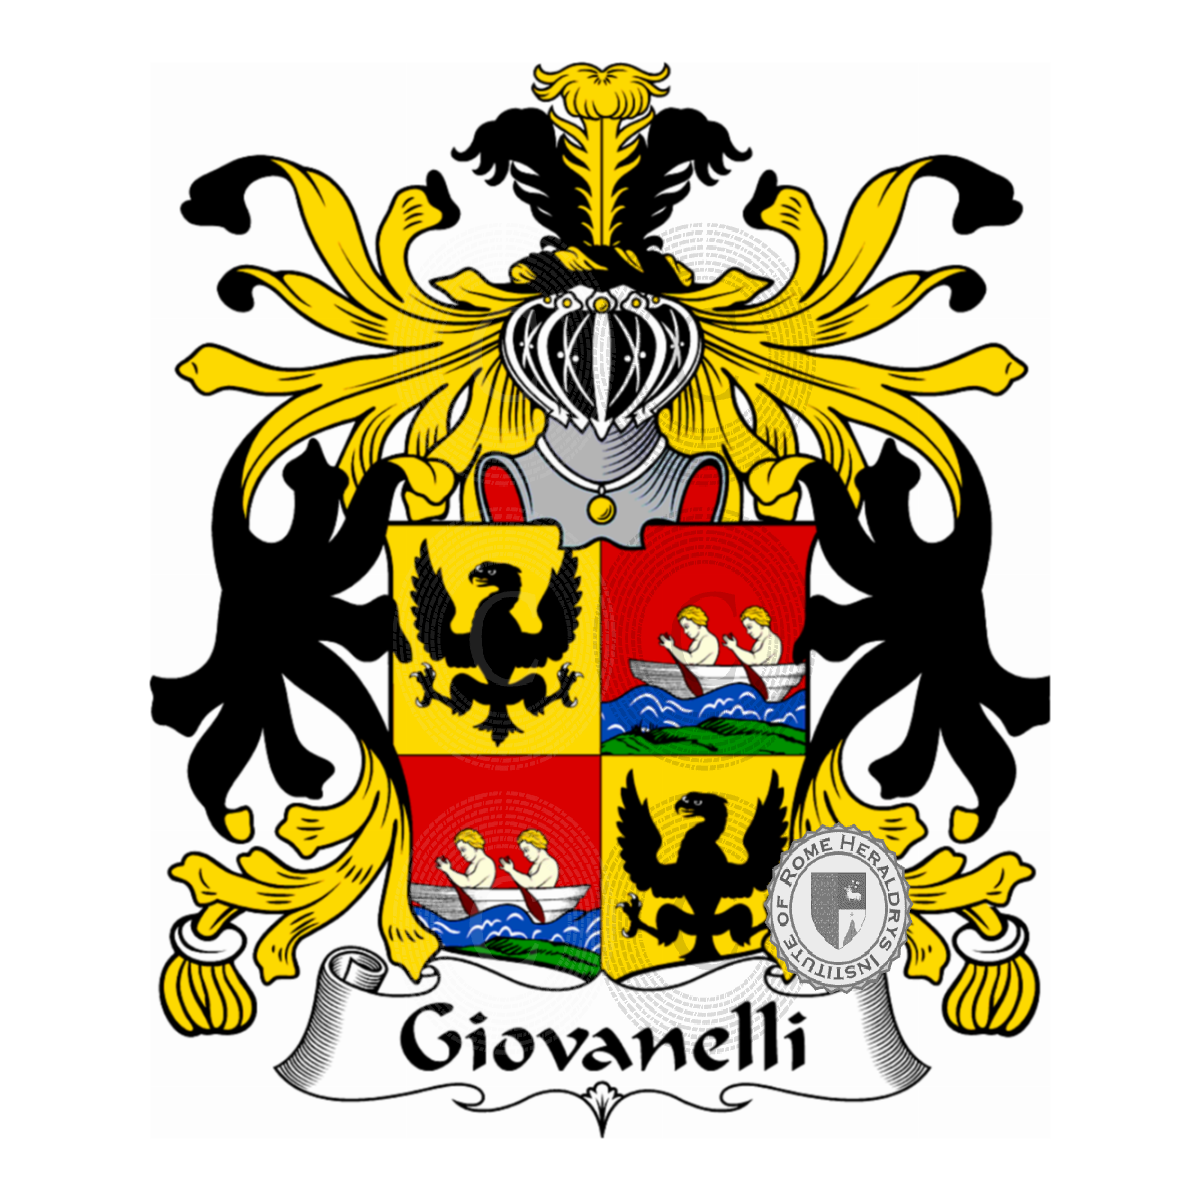 Brasão da famíliaGiovanelli, Giovanelli zu Gerstburg,Giovannelli